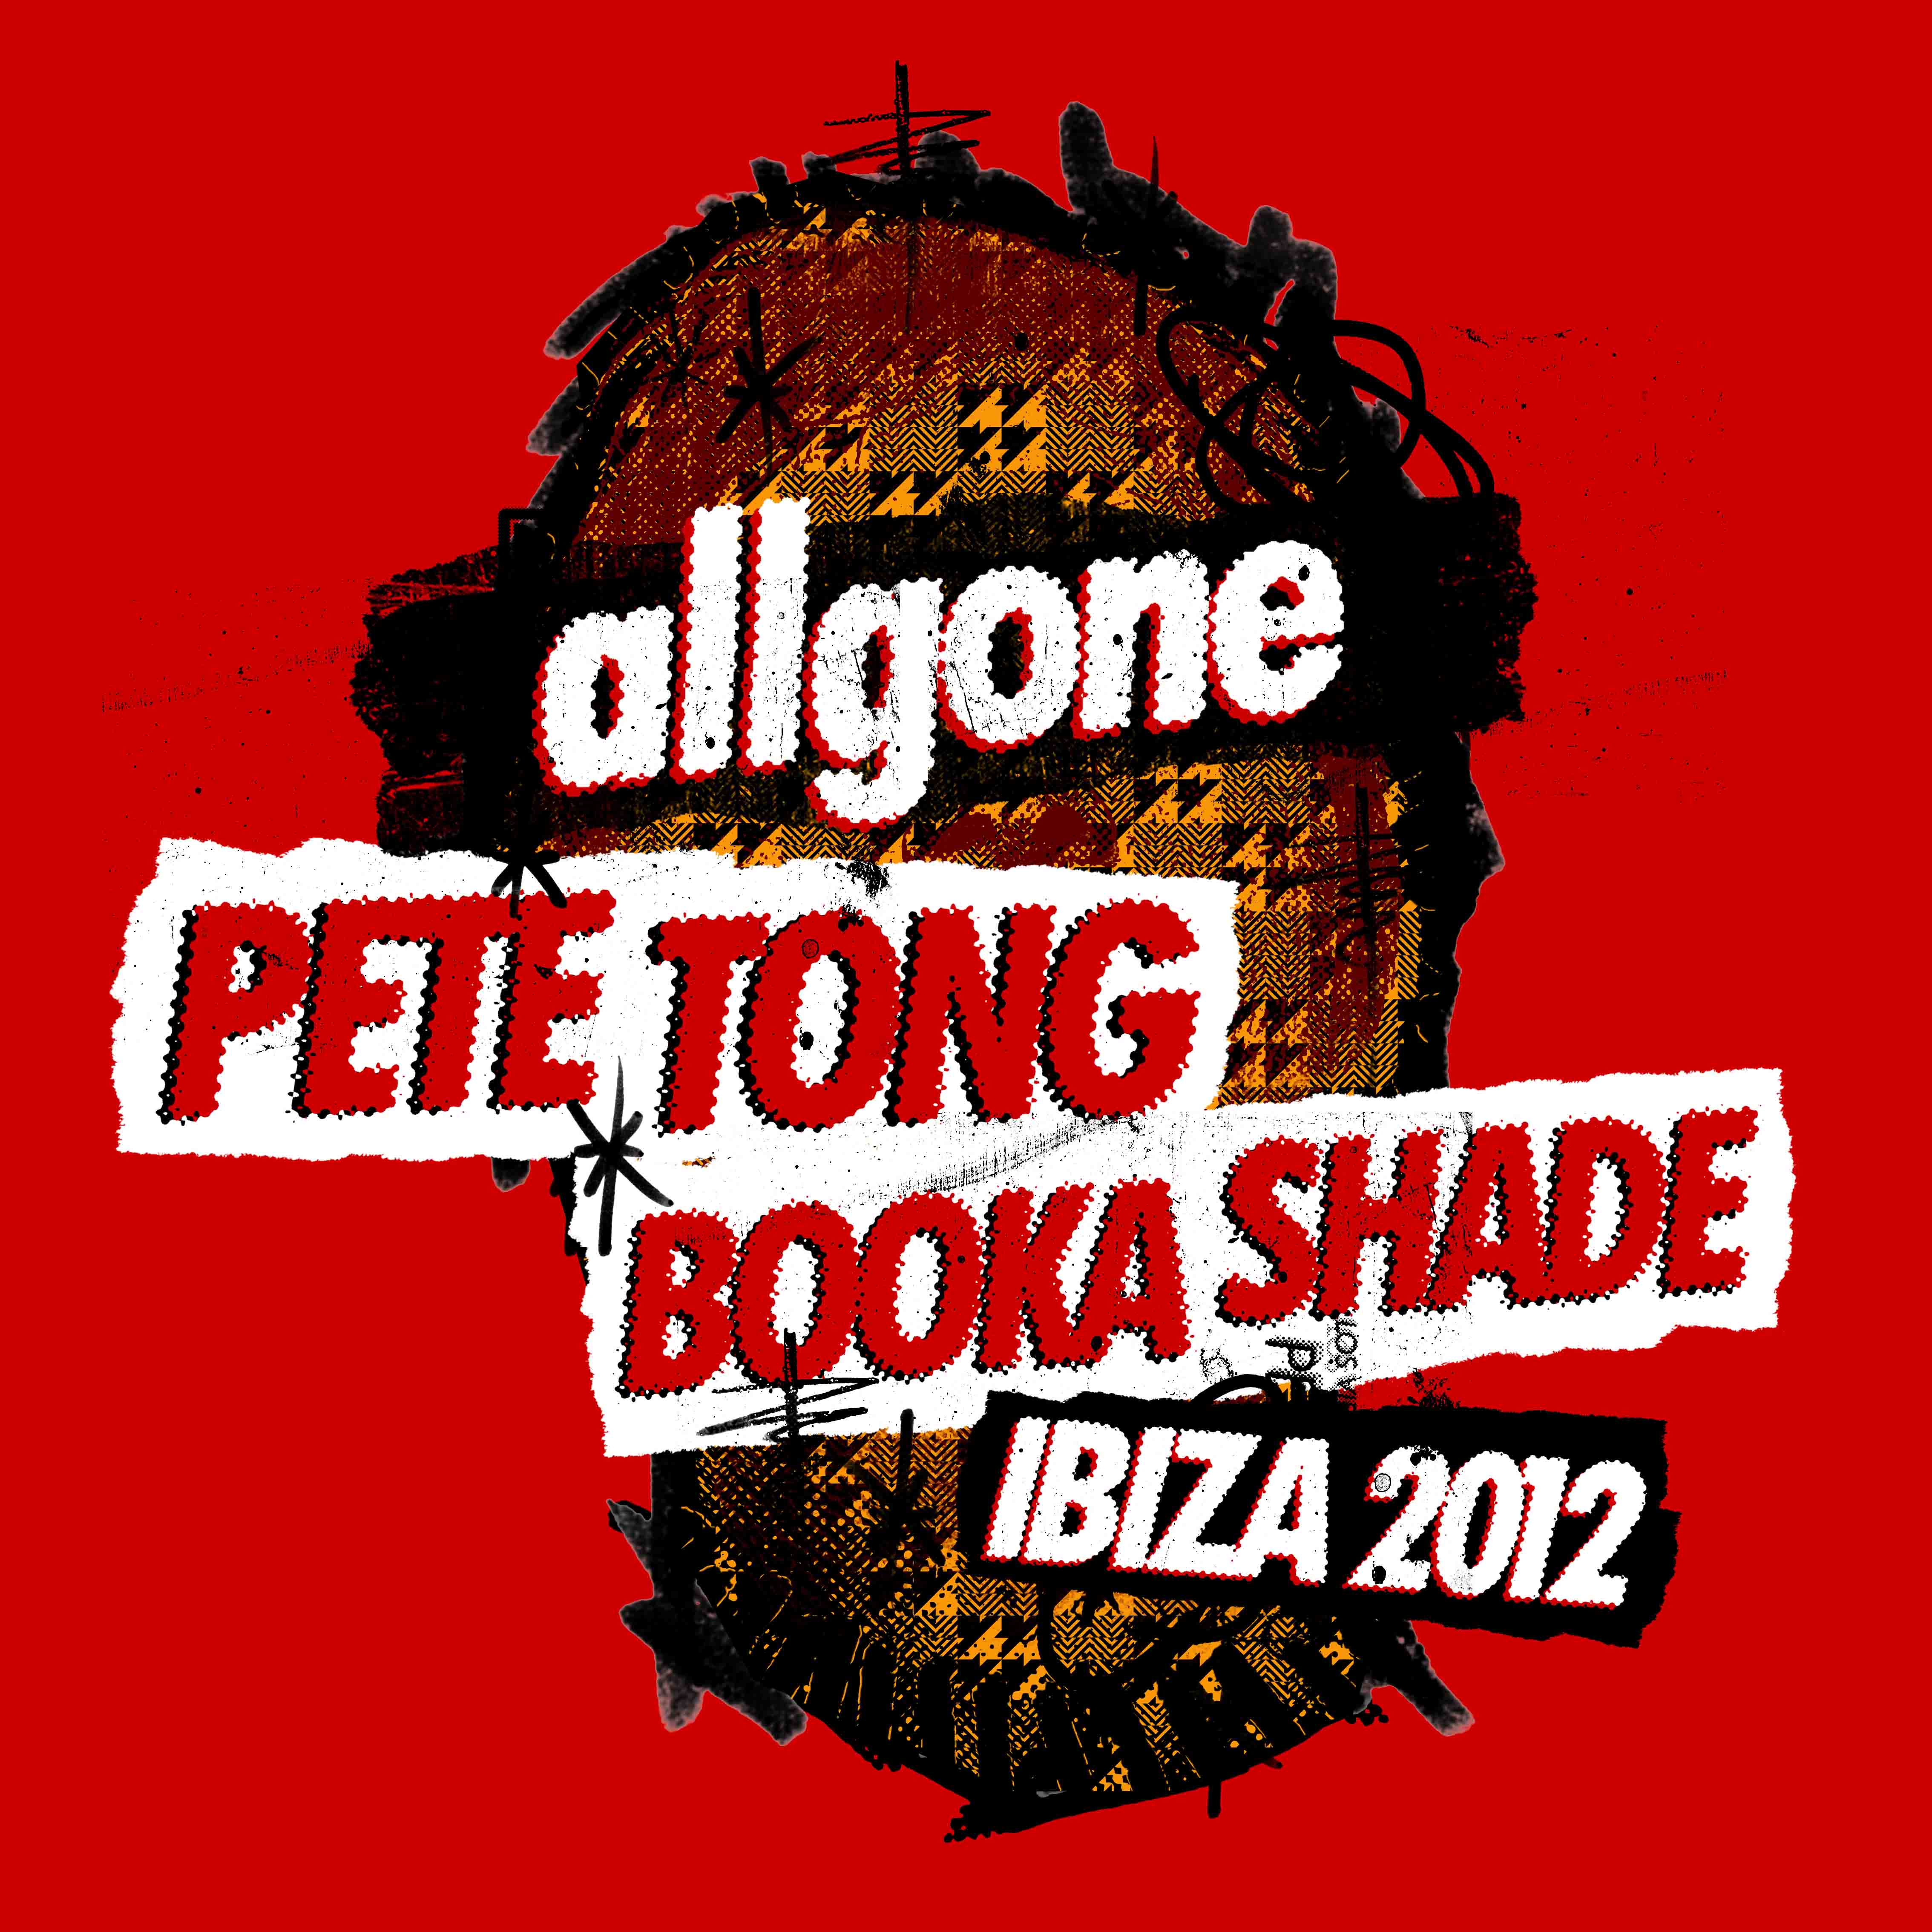 image cover: VA - Allgone Pete Tong & Booka Shade Ibiza 2012 (AGPT03D2)